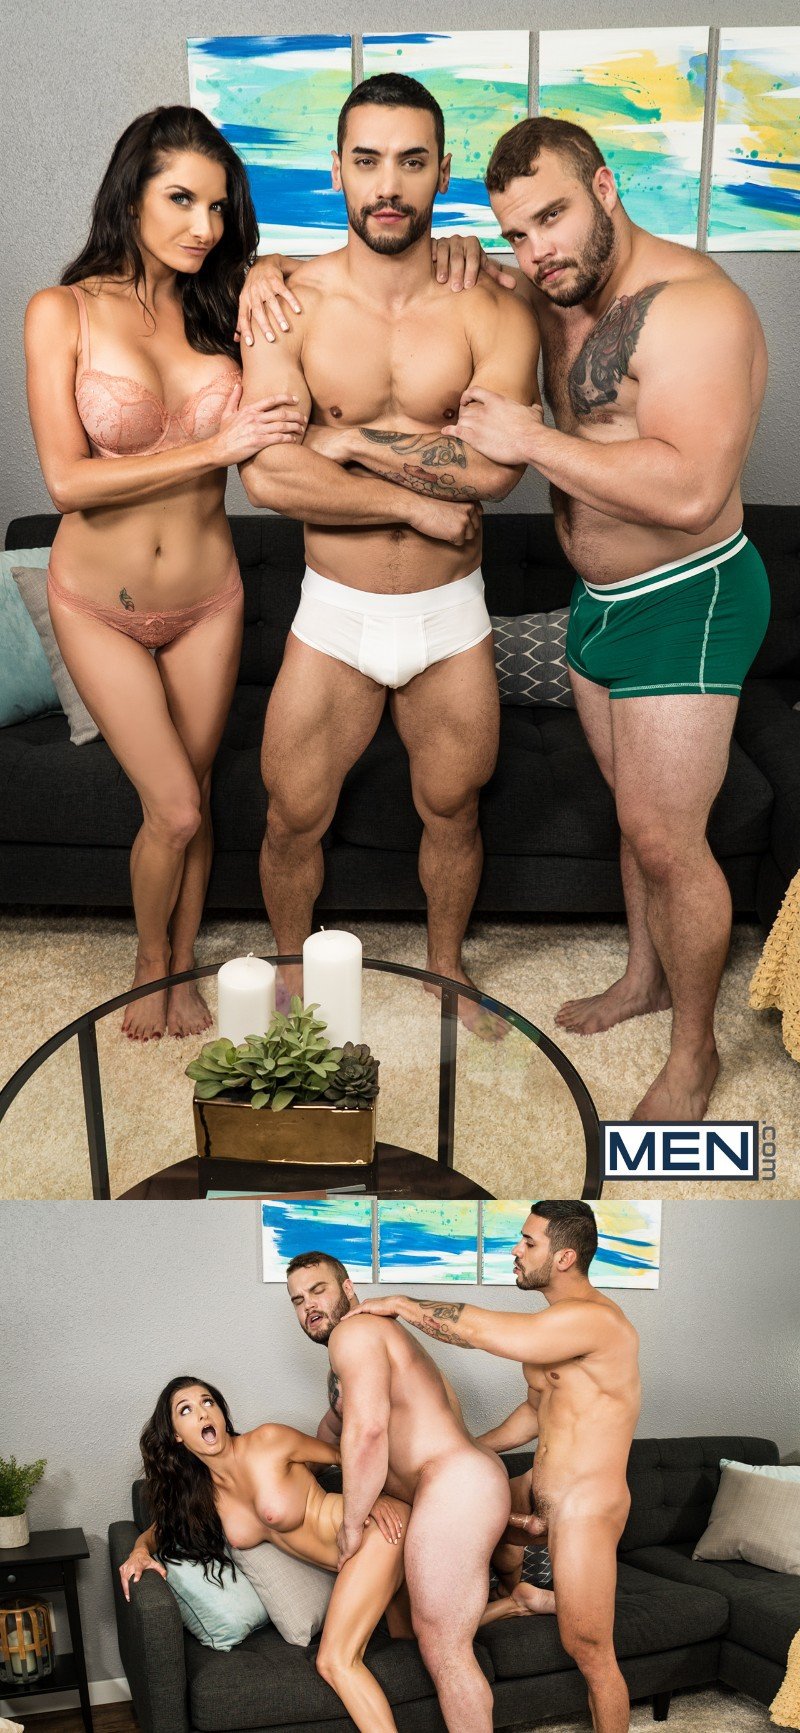 Men Bi - MEN.com Releases Its First Bisexual Scene & Members Hate It! - GayDemon